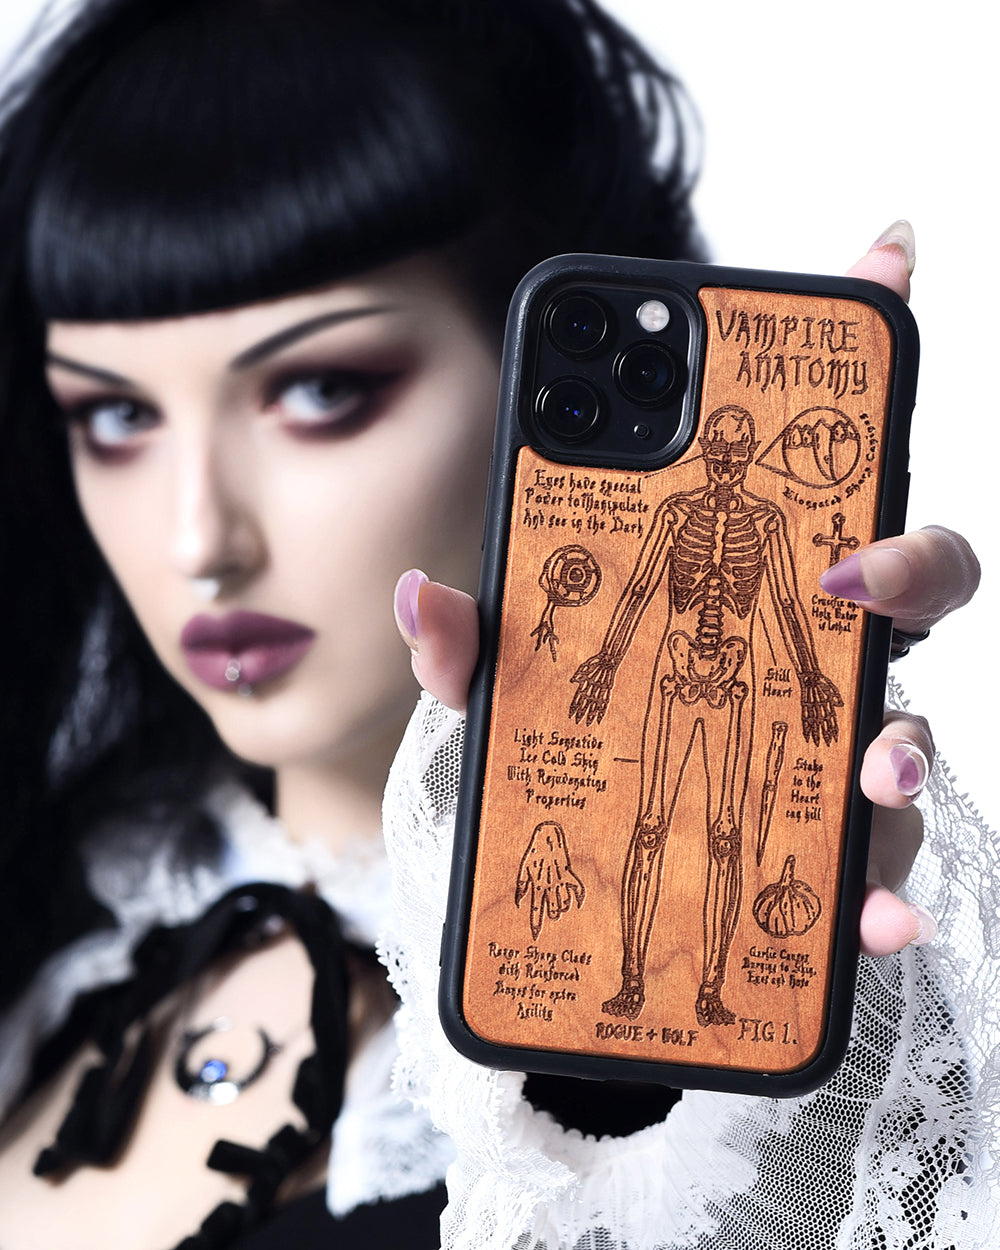 Vampire Anatomy - Engraved Cherry Wood Phone Case